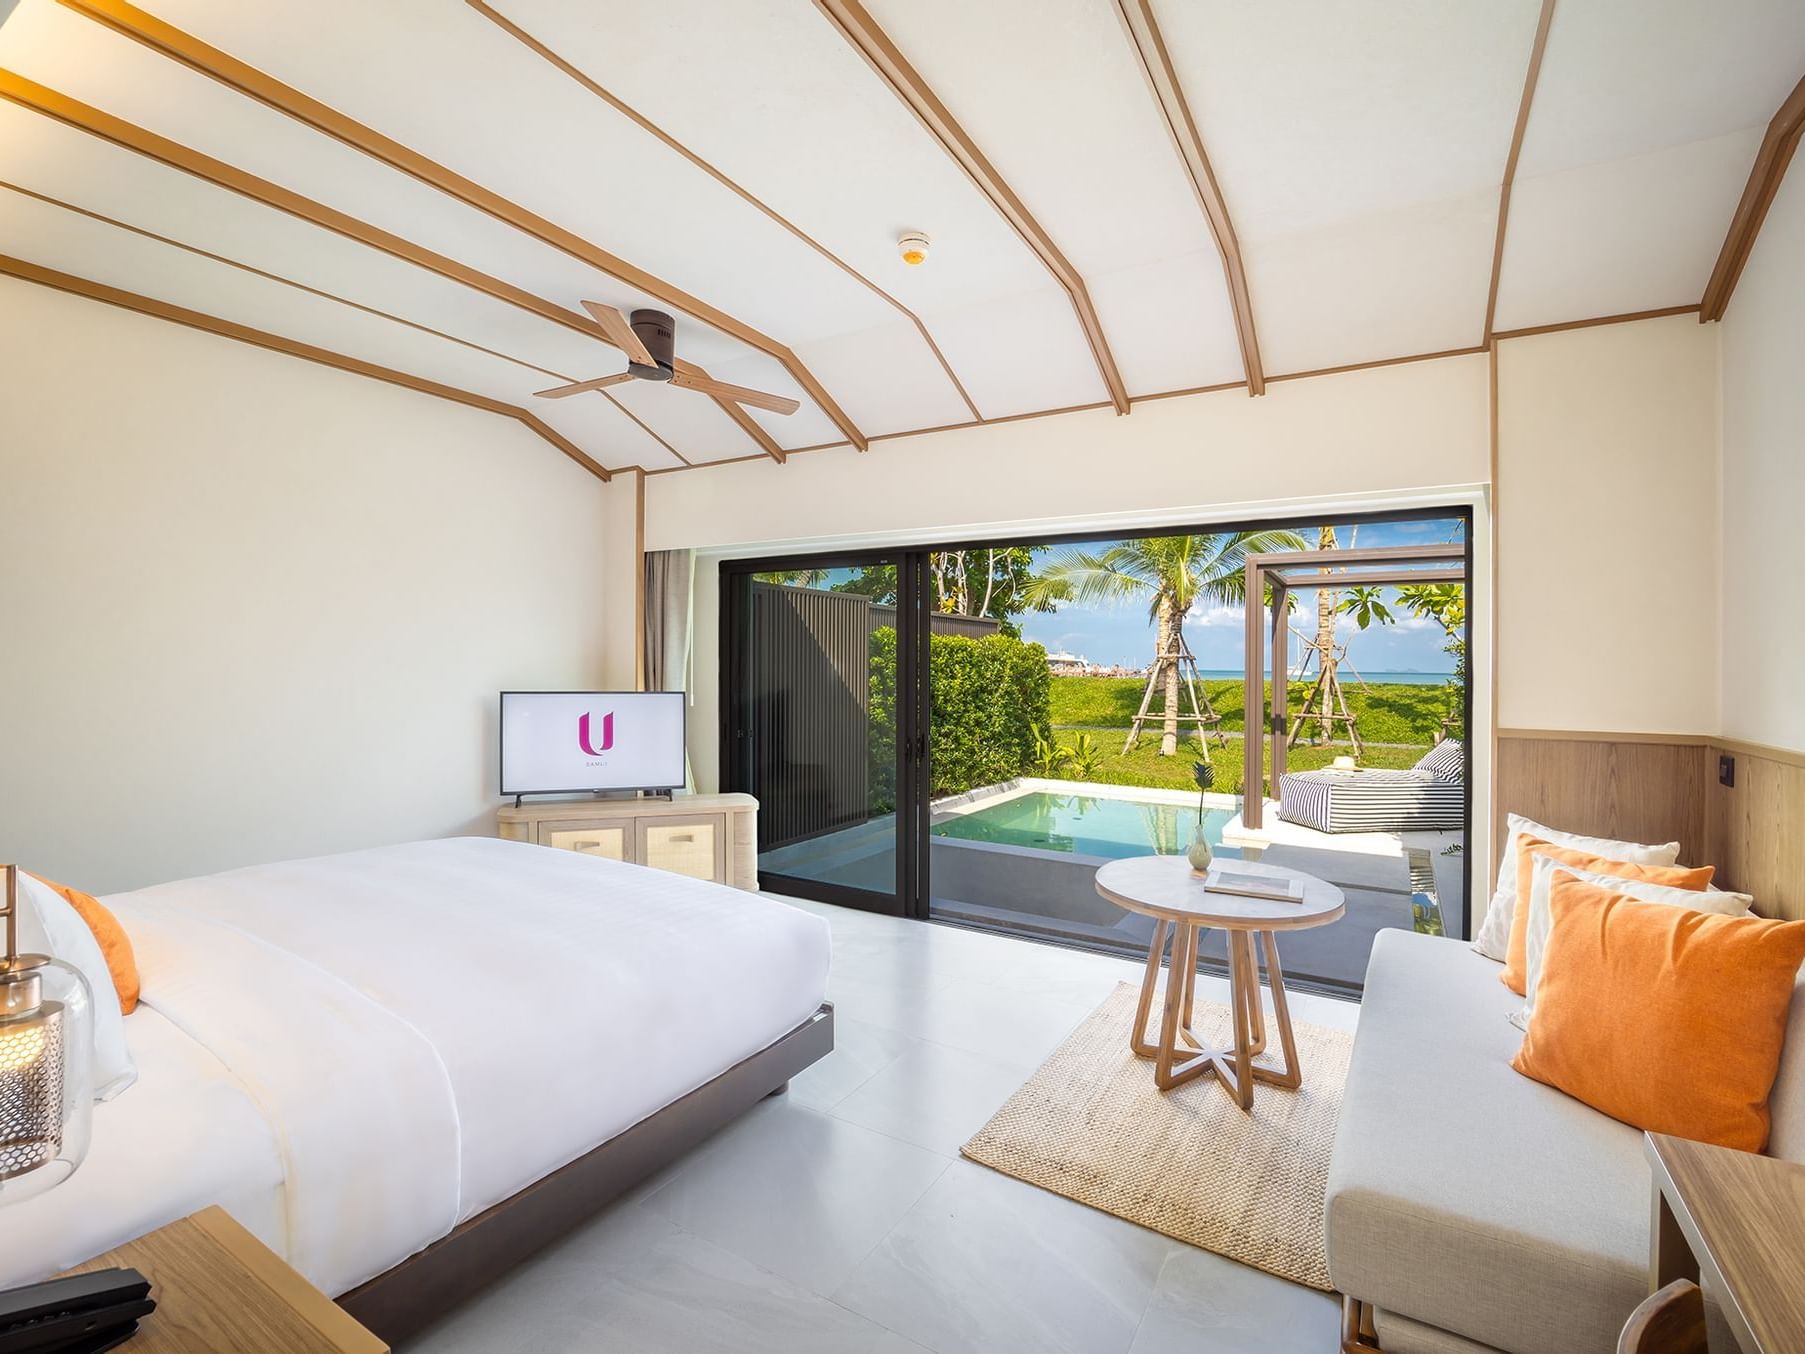 Interior of Beachfront pool villa at U Hotels & Resorts